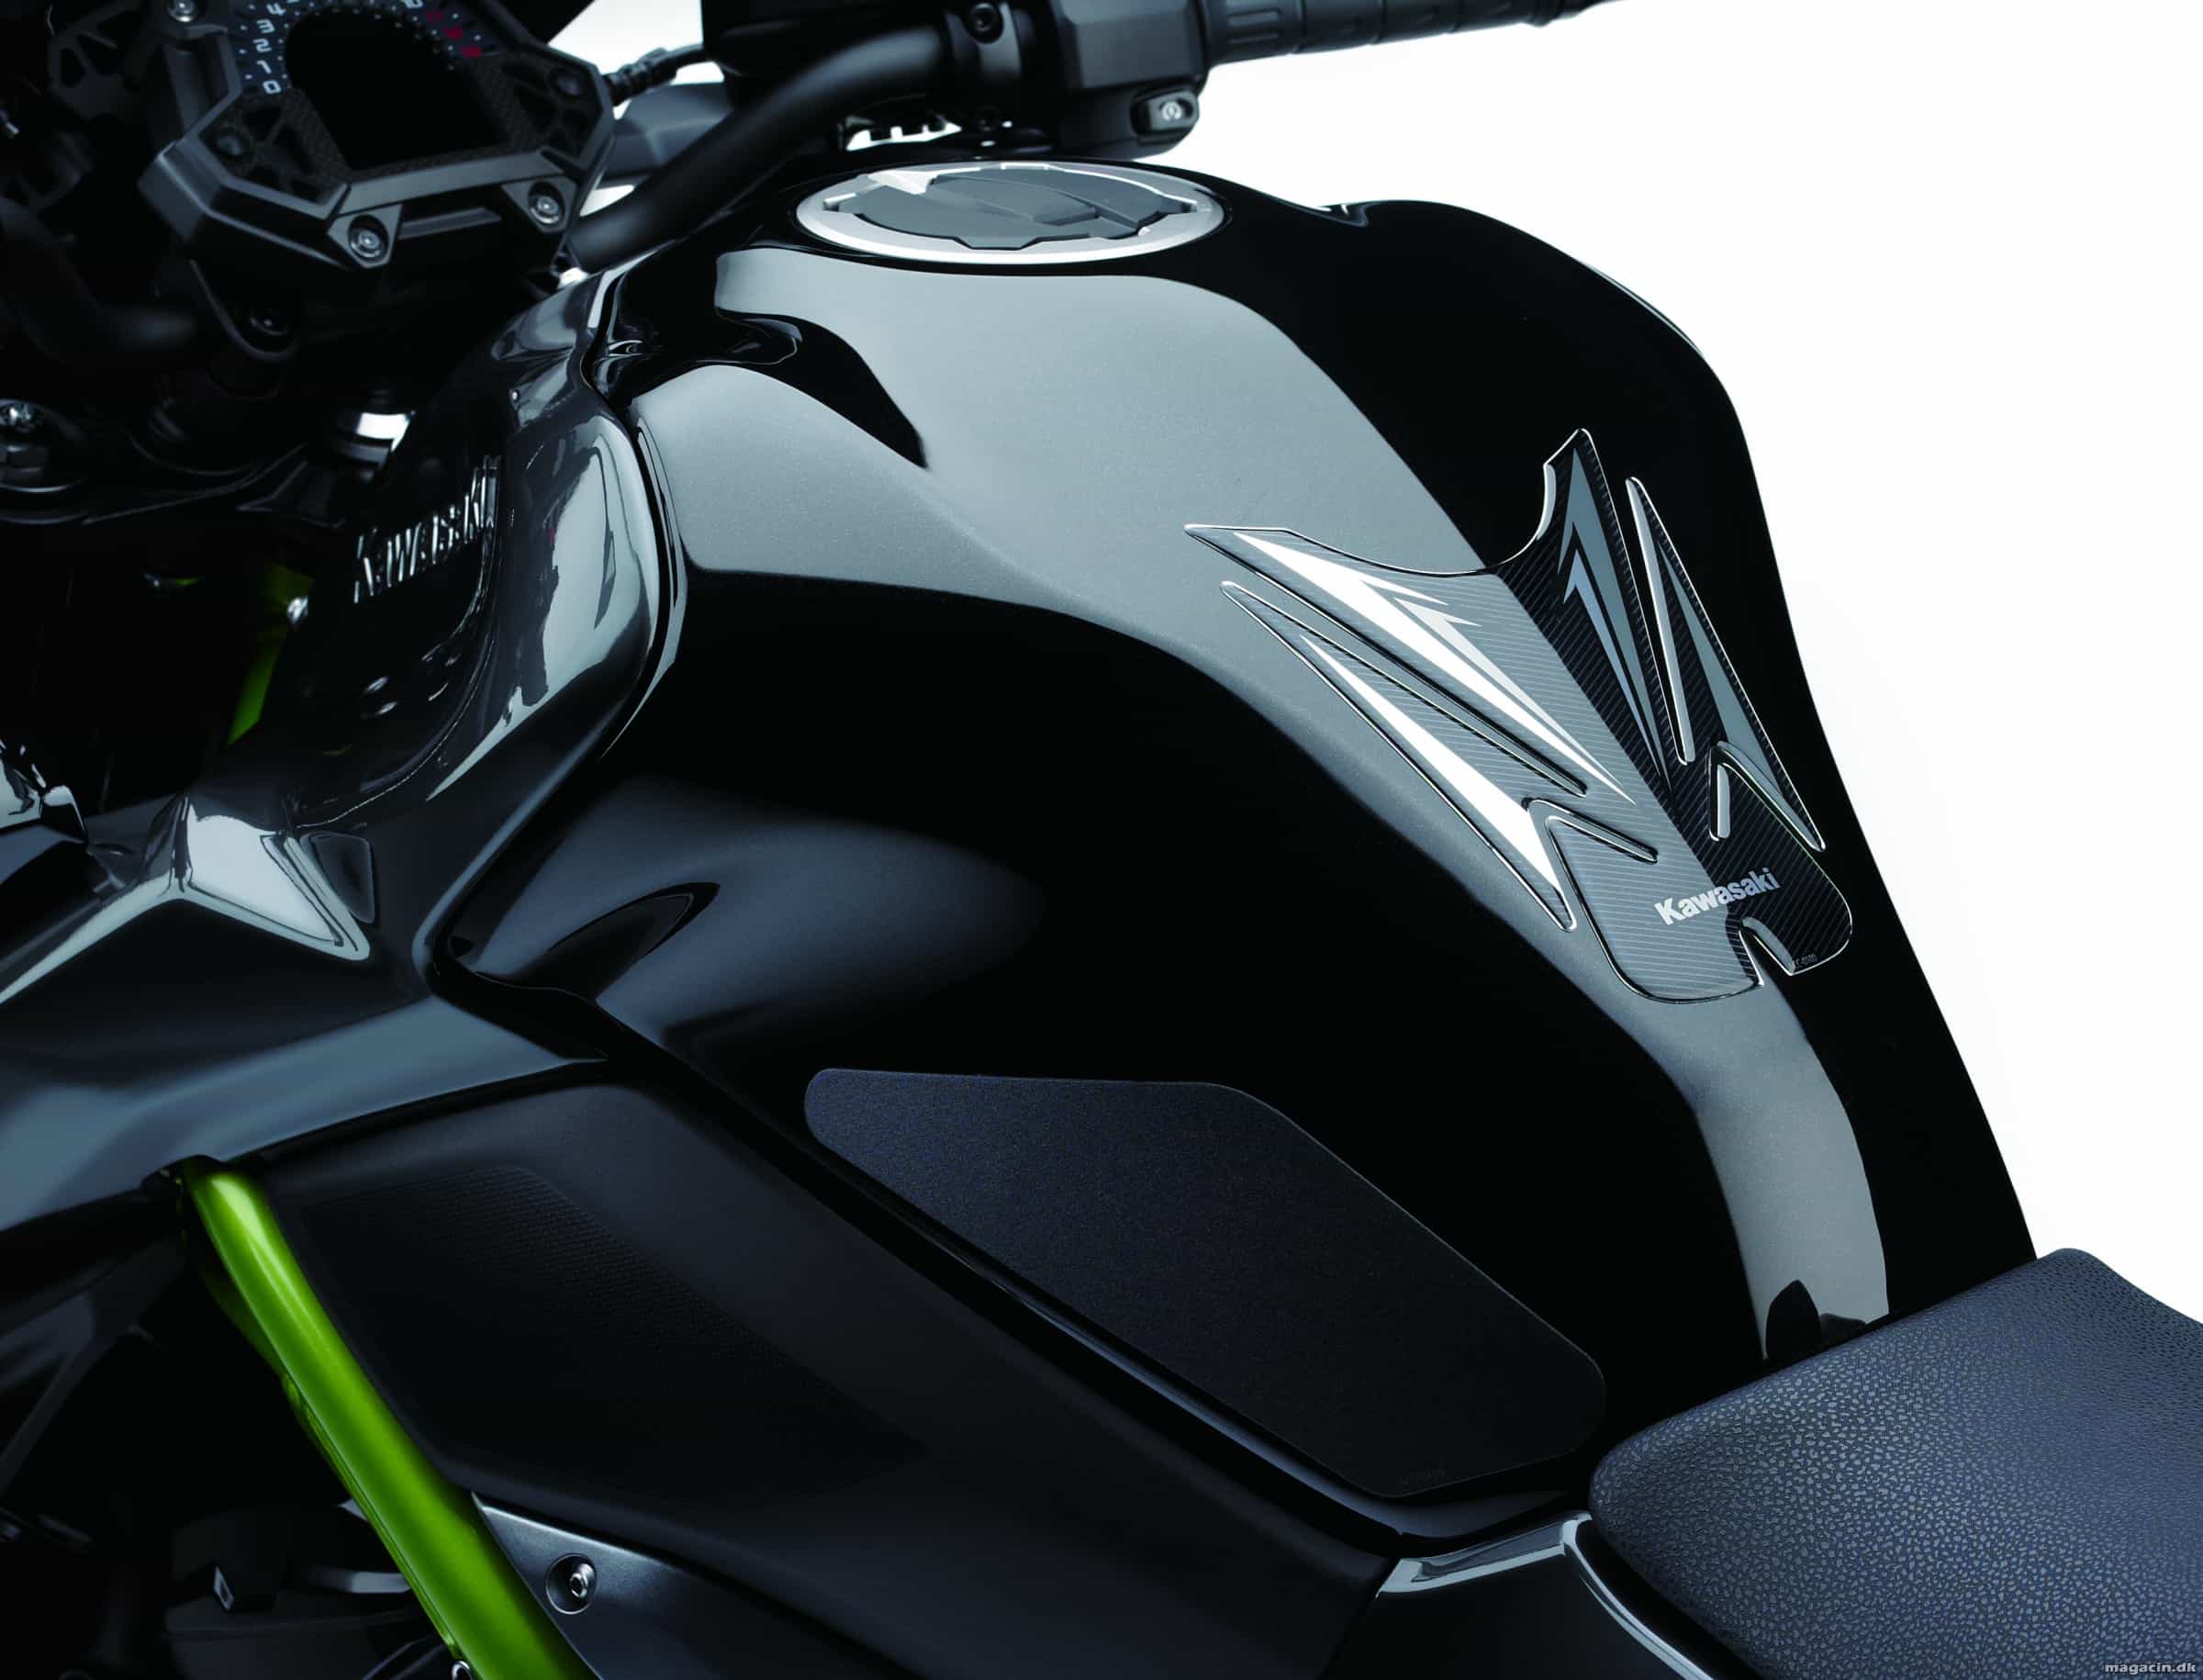 Prøvekørt: 2017 Kawasaki Z 900 – Raffineret rå Kawasaki